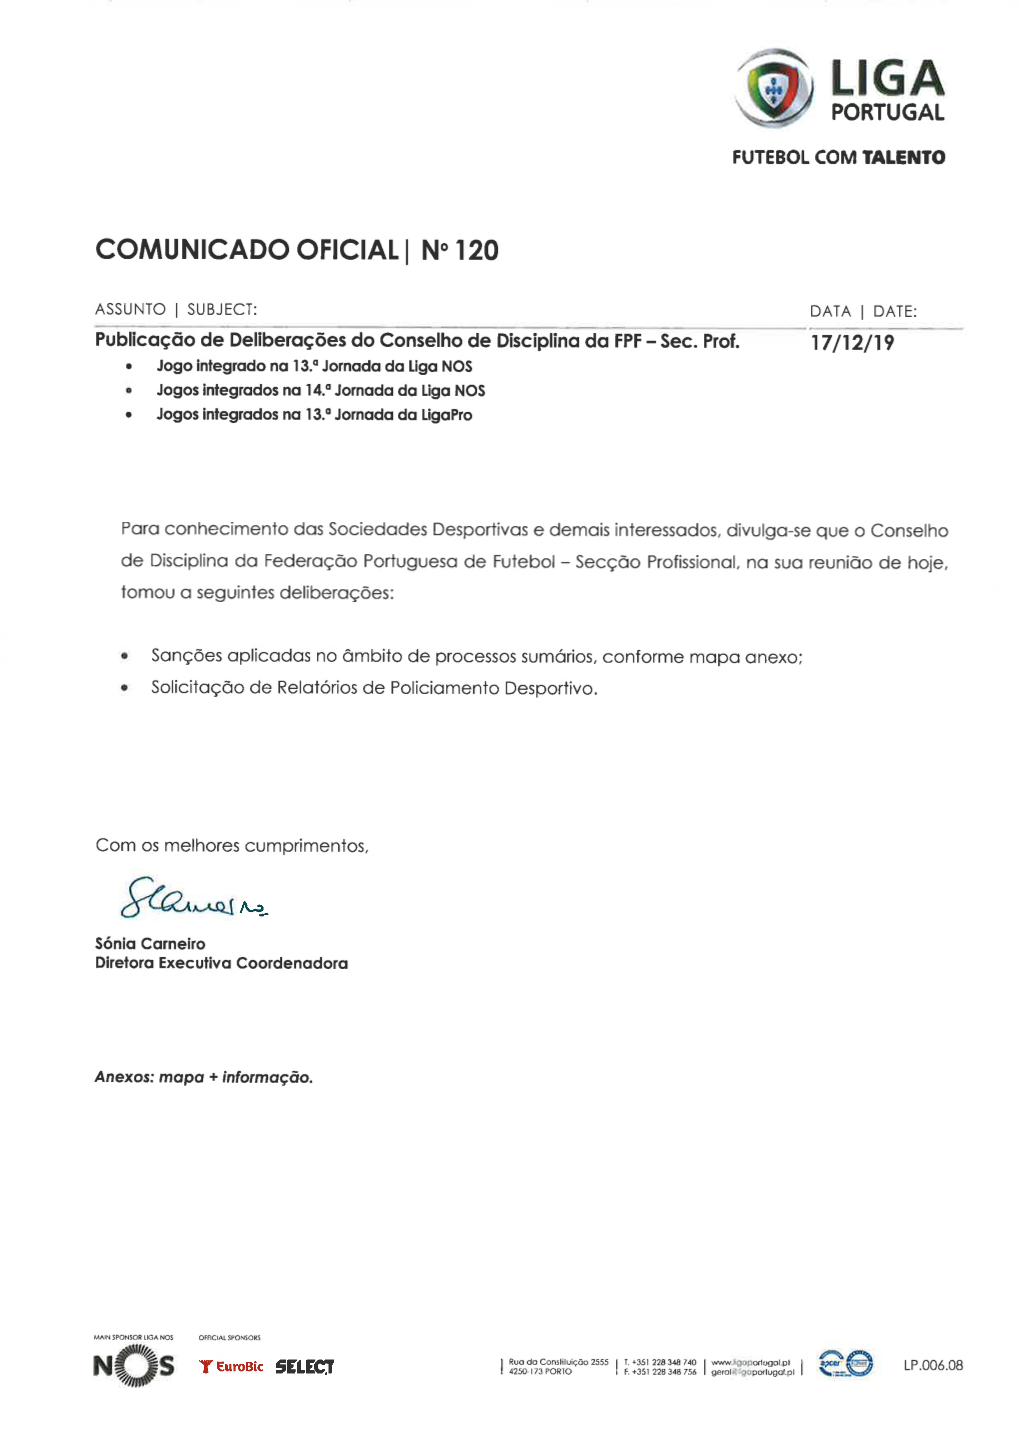 Comunicado-Oficial-120-Publicacao-De-Deliberacoes